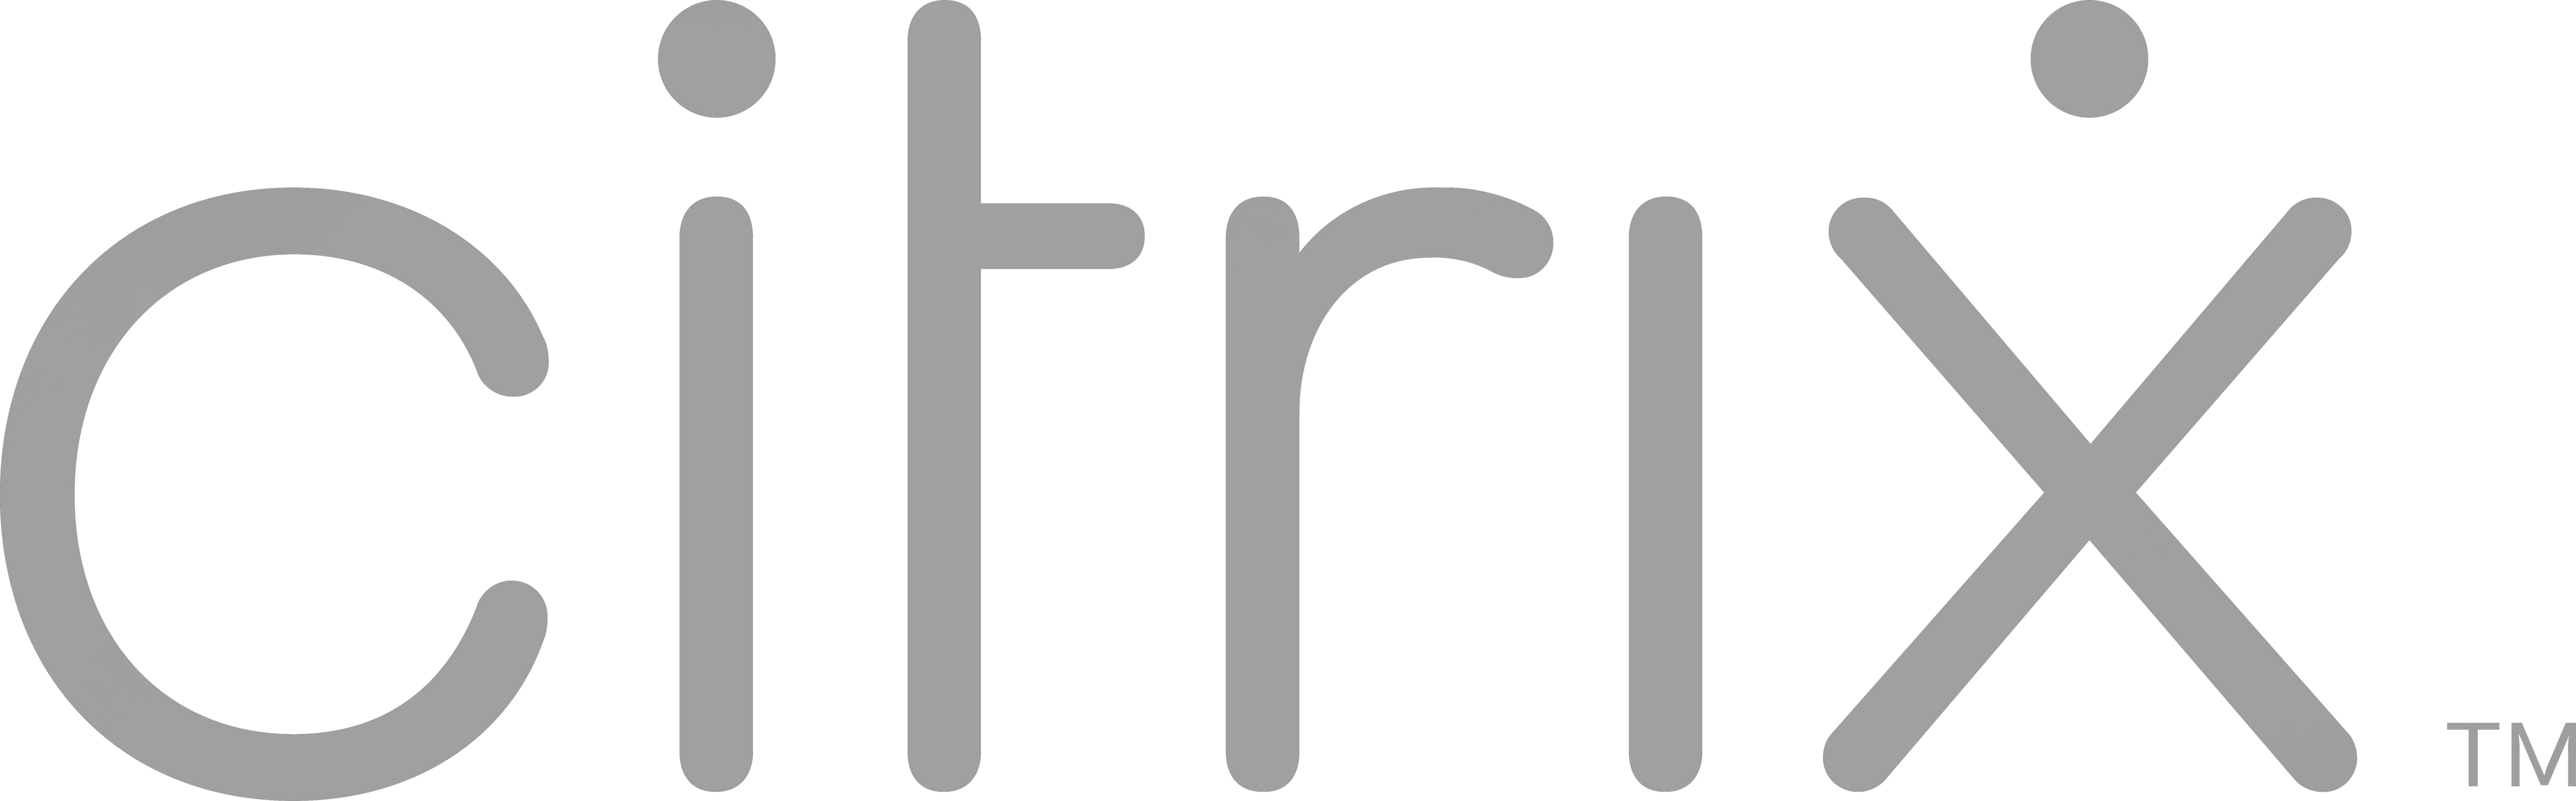 Citrix-Systems-Logo